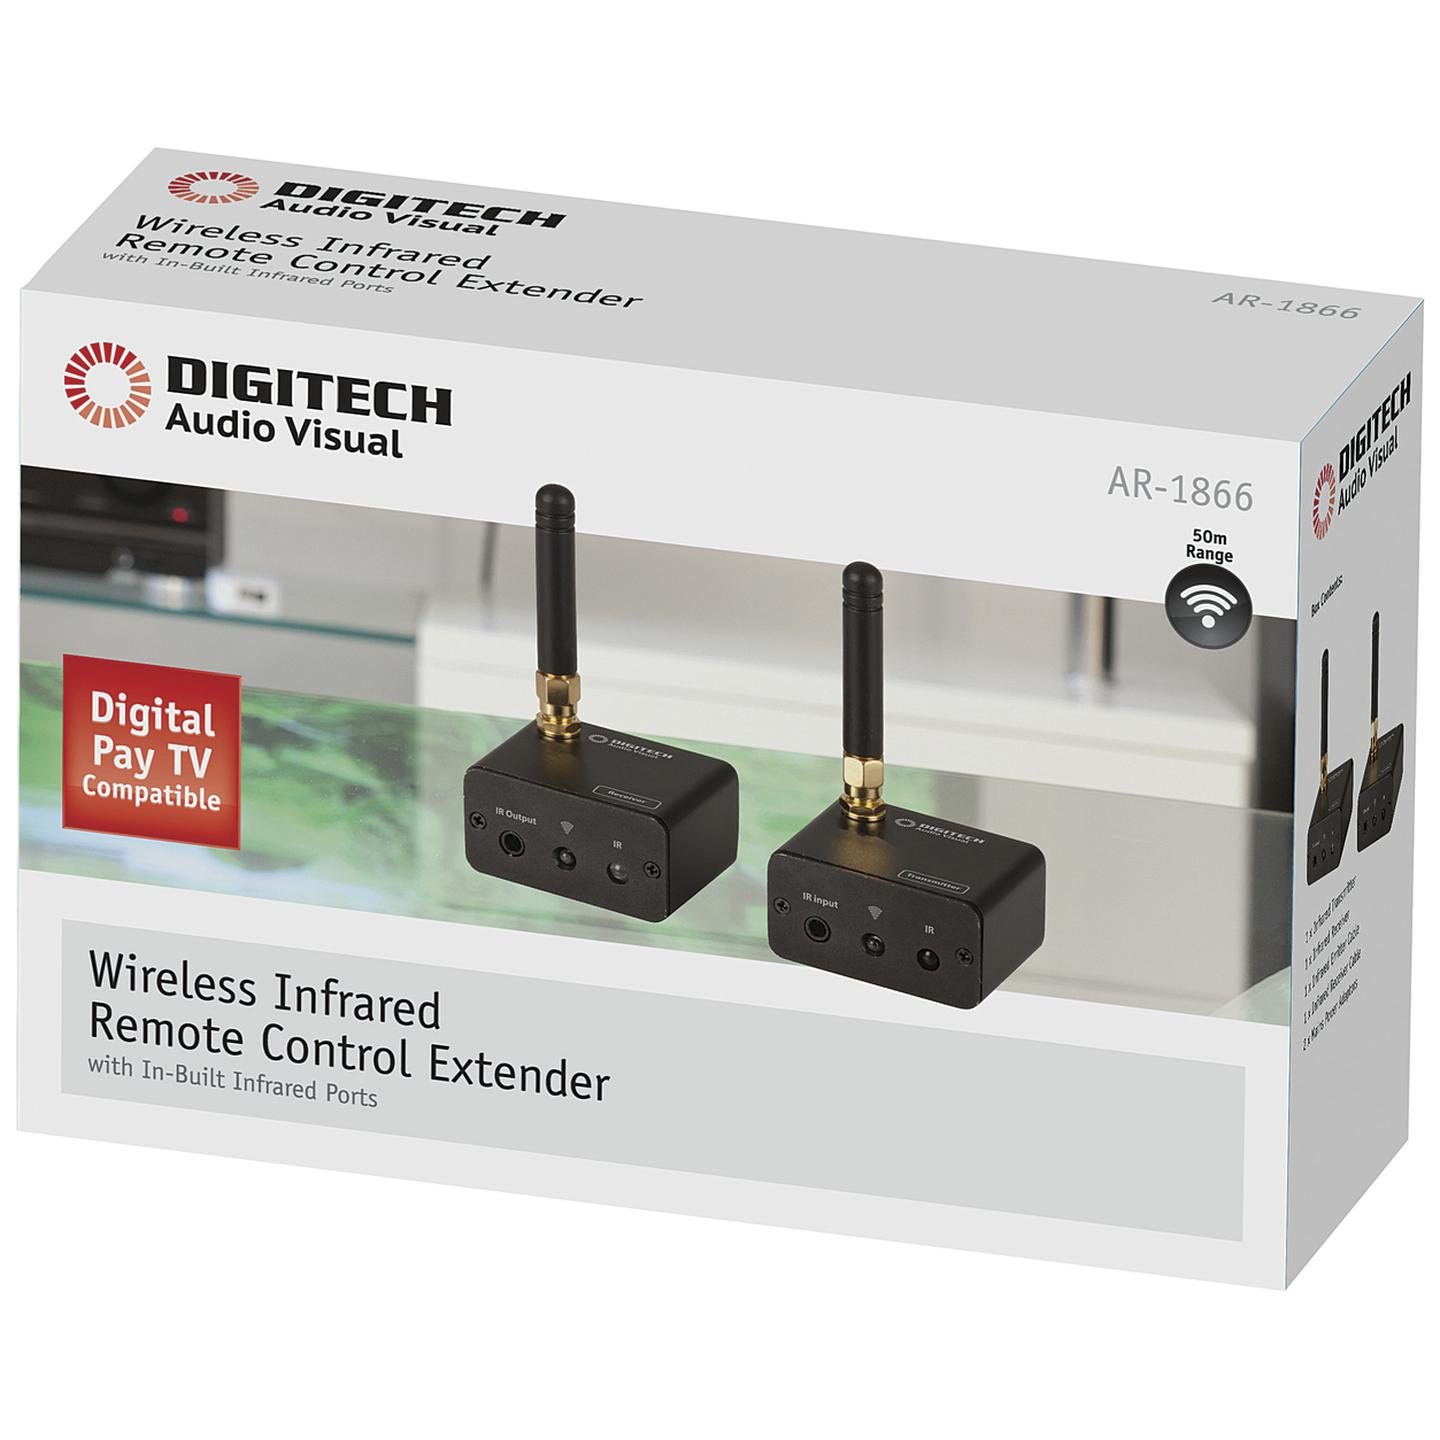 Wireless Infrared Remote Control Extender